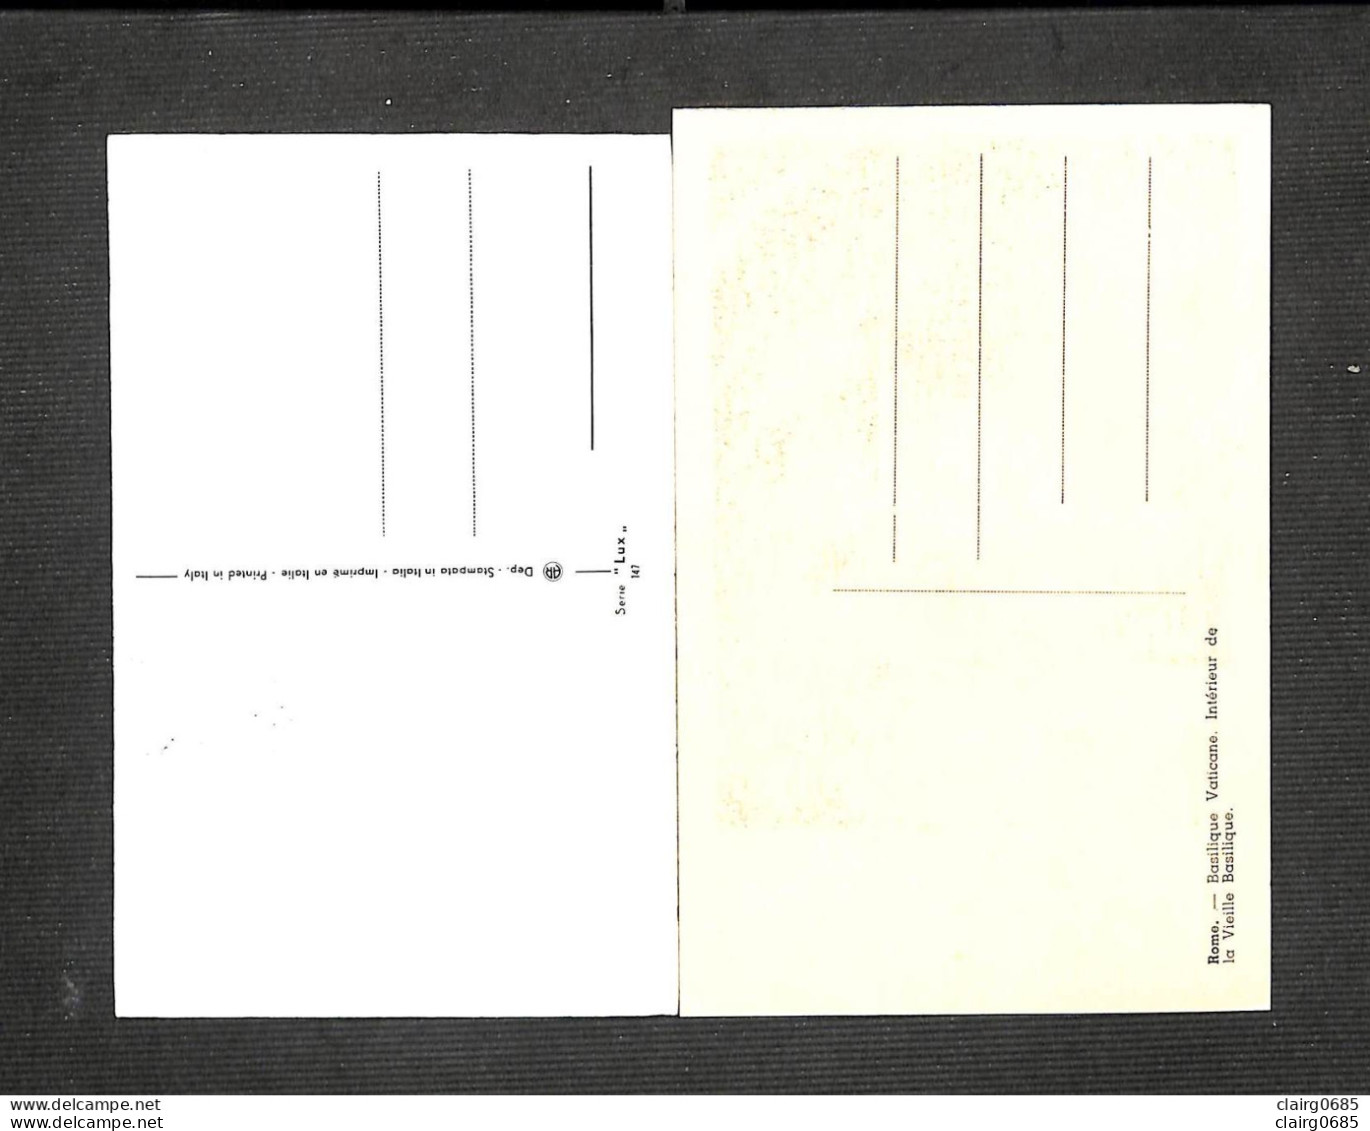 VATICAN - POSTE VATICANE - 2 Cartes MAXIMUM 1954 - S. PETRUS - Basilique Vaticane Intérieur - Maximumkarten (MC)